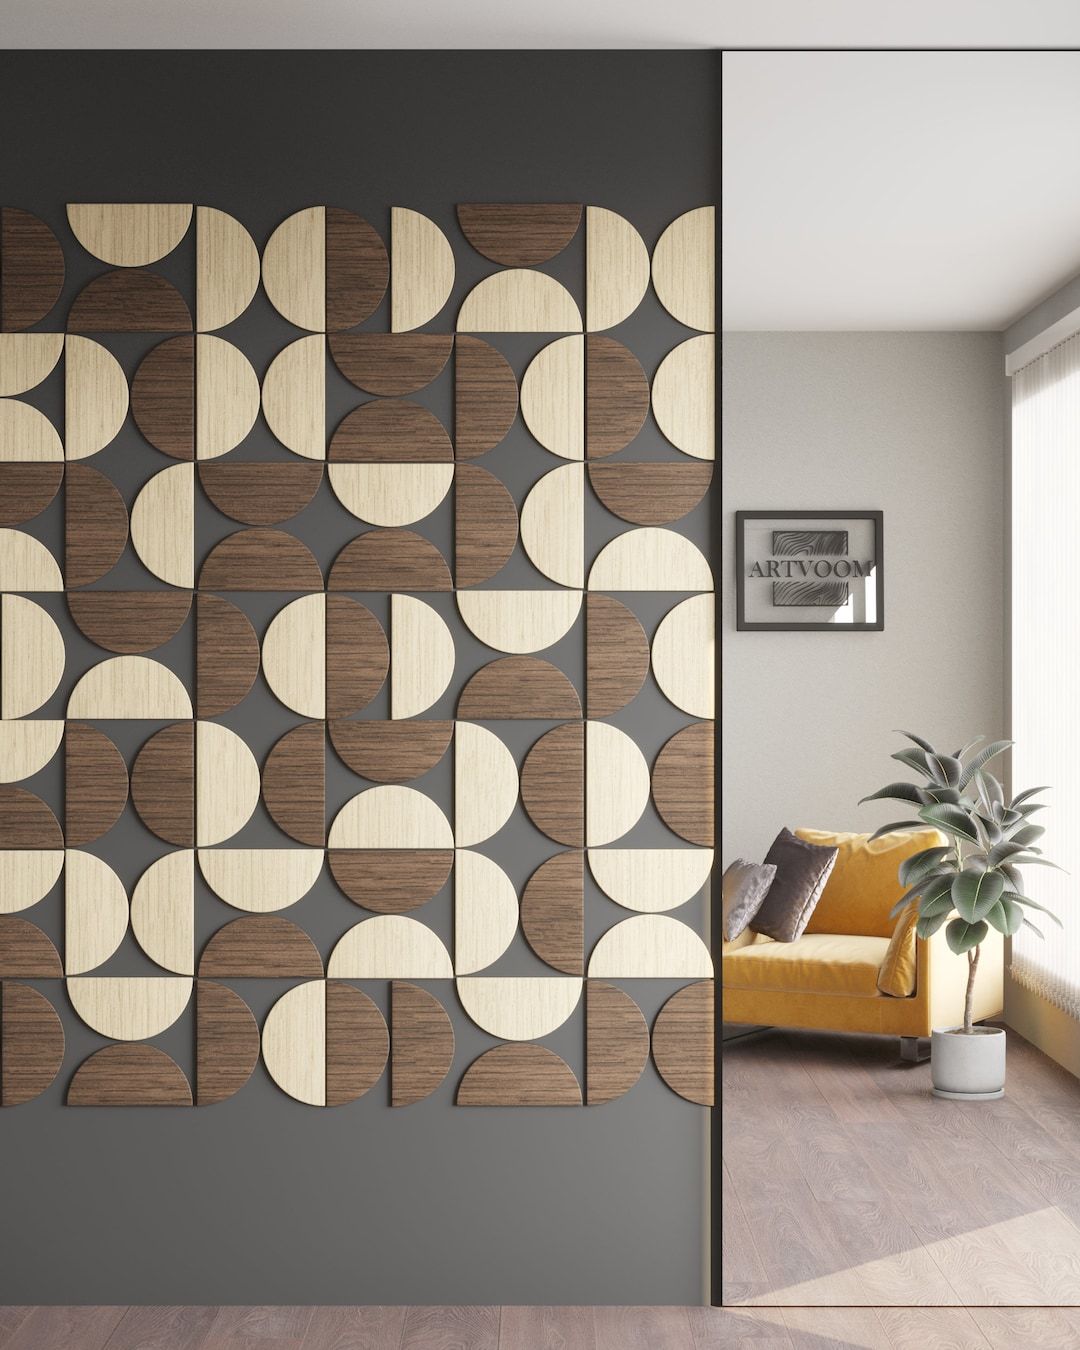 Home Decor Designs Of Geometric Decor : Stunning Geometric Decor Home Design Ideas